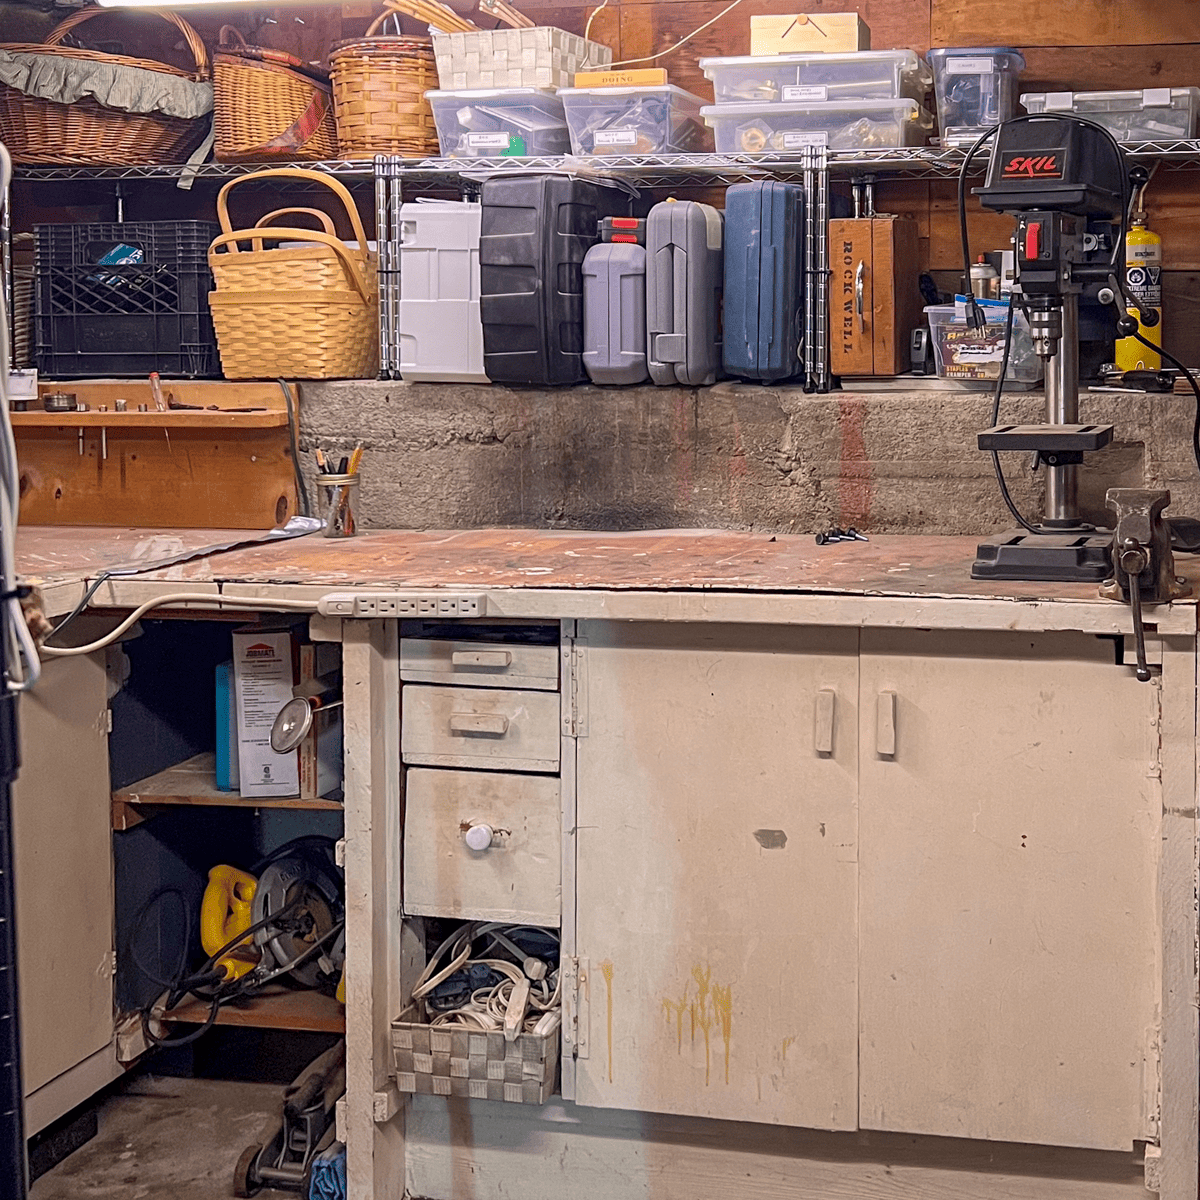 A real life organized basement workshop.